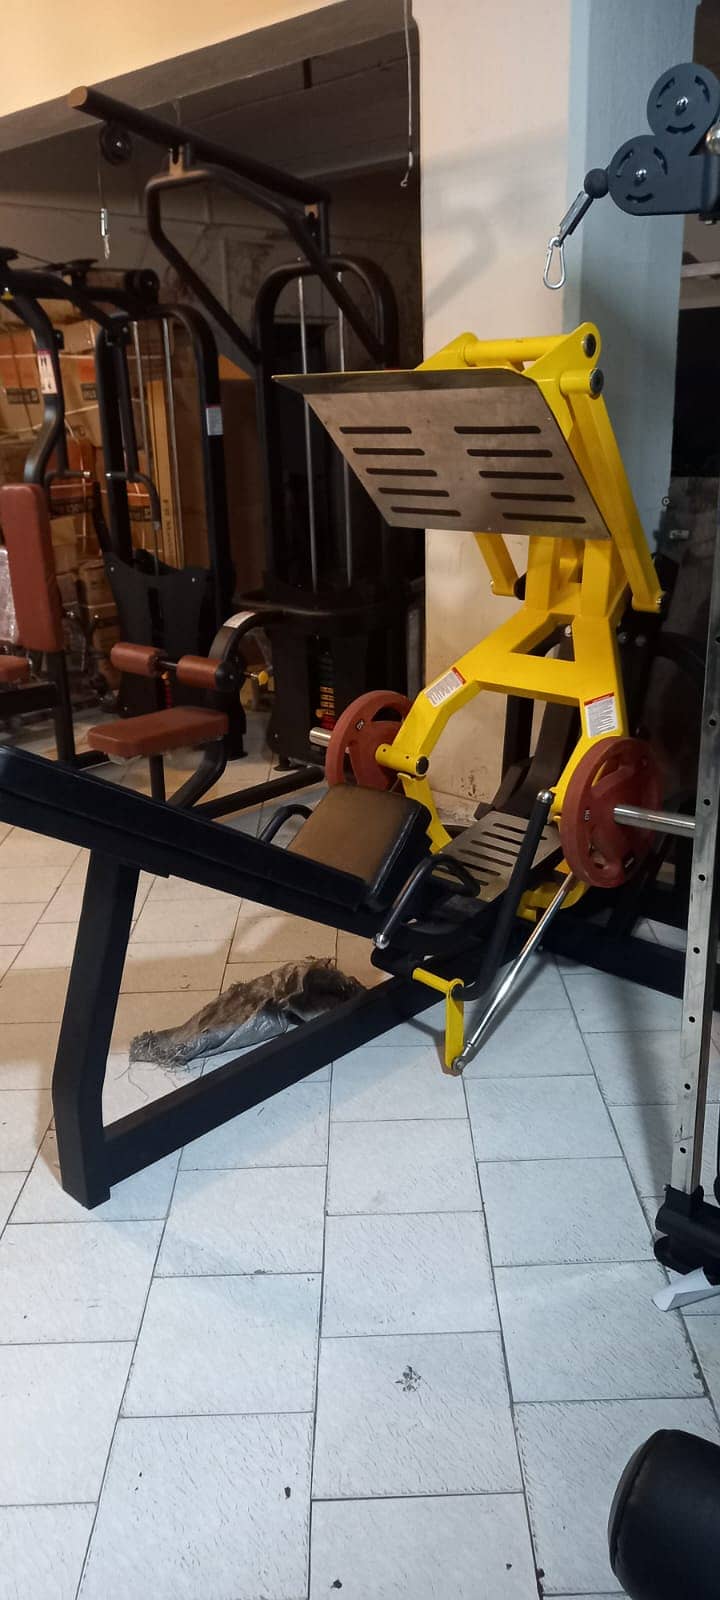 gym setup dumbel |commercial treadmill | elliptical | bench plate rods 7